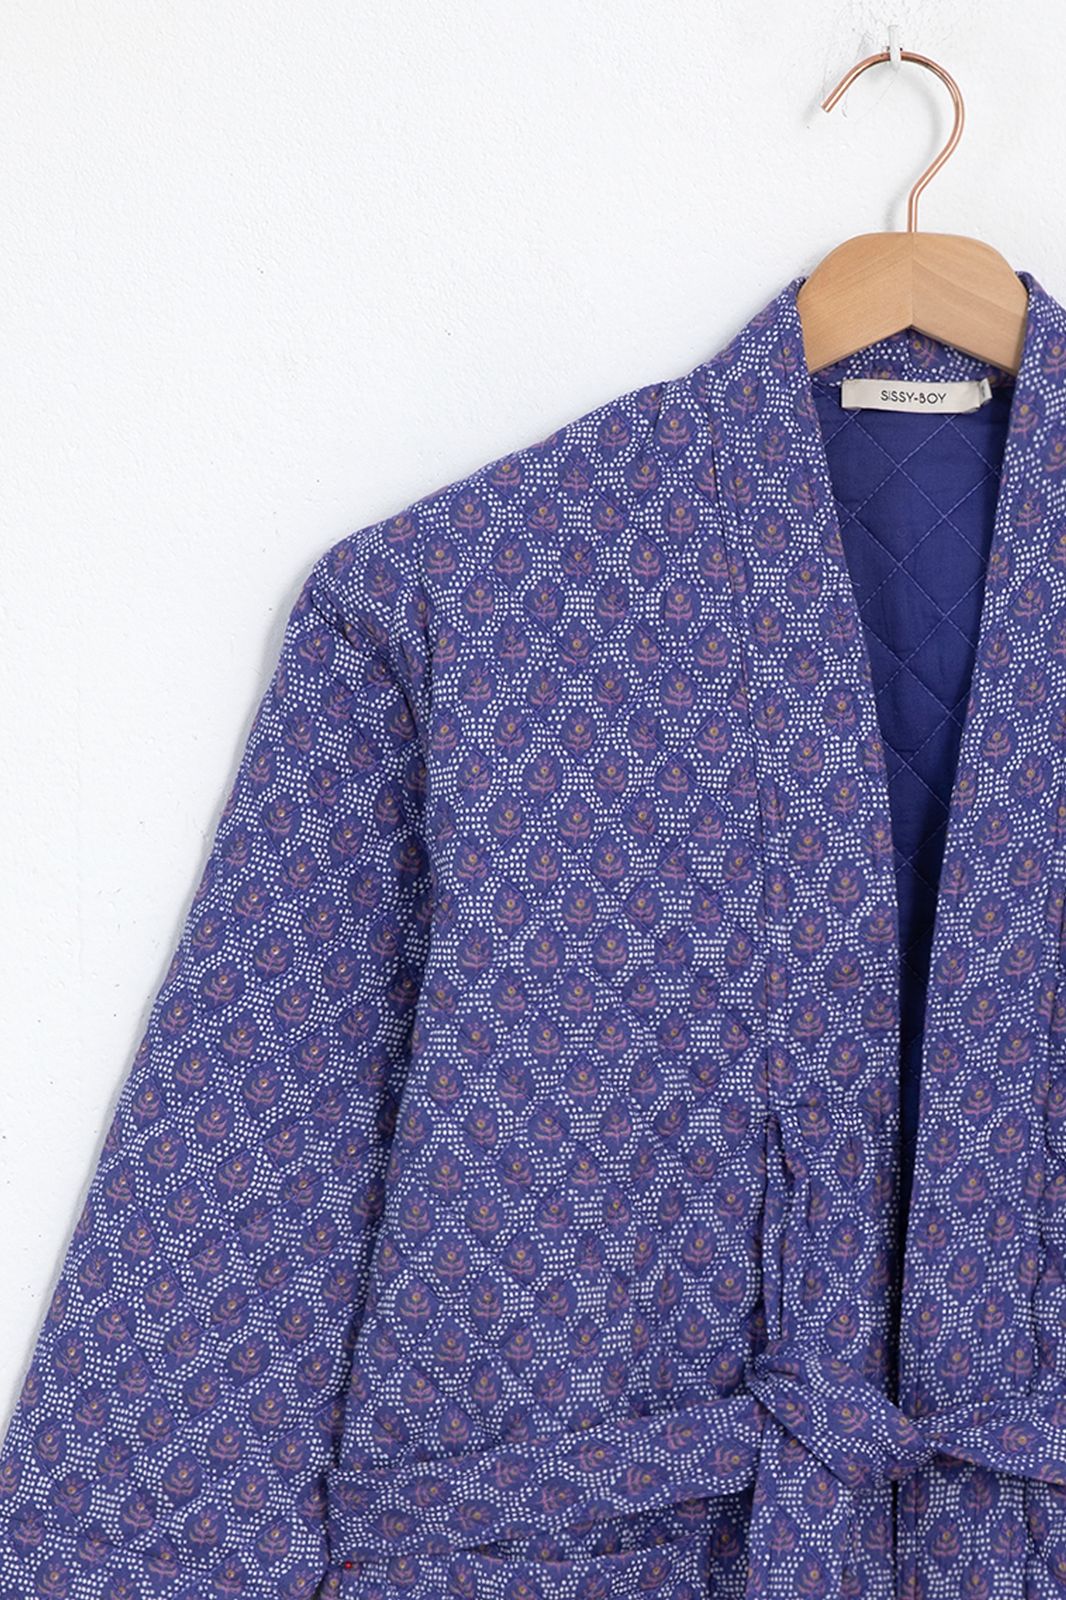 vorm Vertrek naar Bediening mogelijk Donkerpaarse korte kimono jas met print - Dames | Sissy-Boy